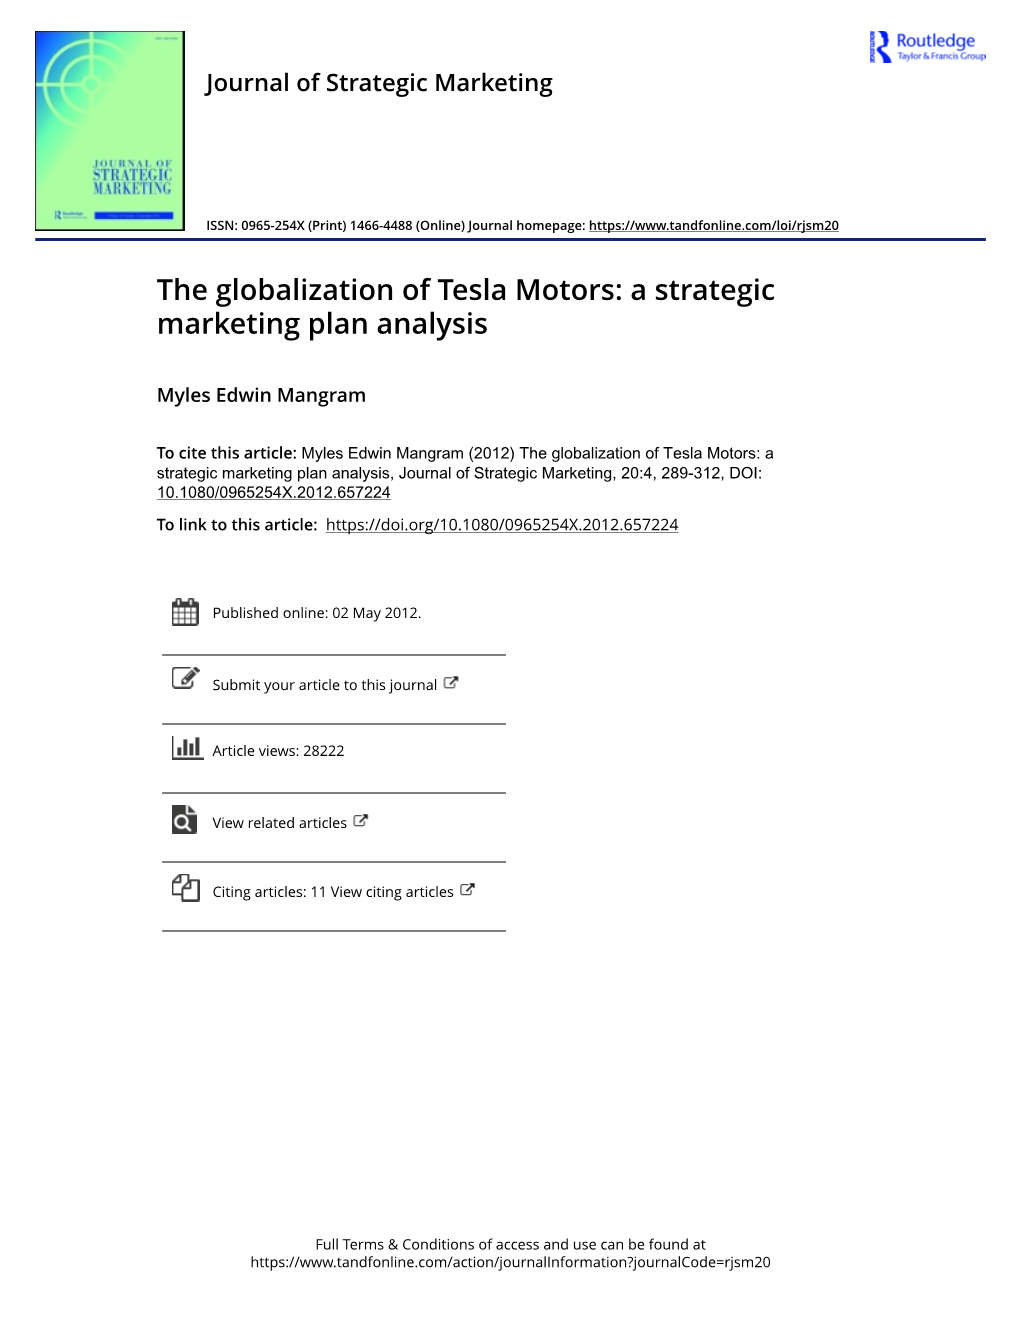 The Globalization of Tesla Motors: a Strategic Marketing Plan Analysis